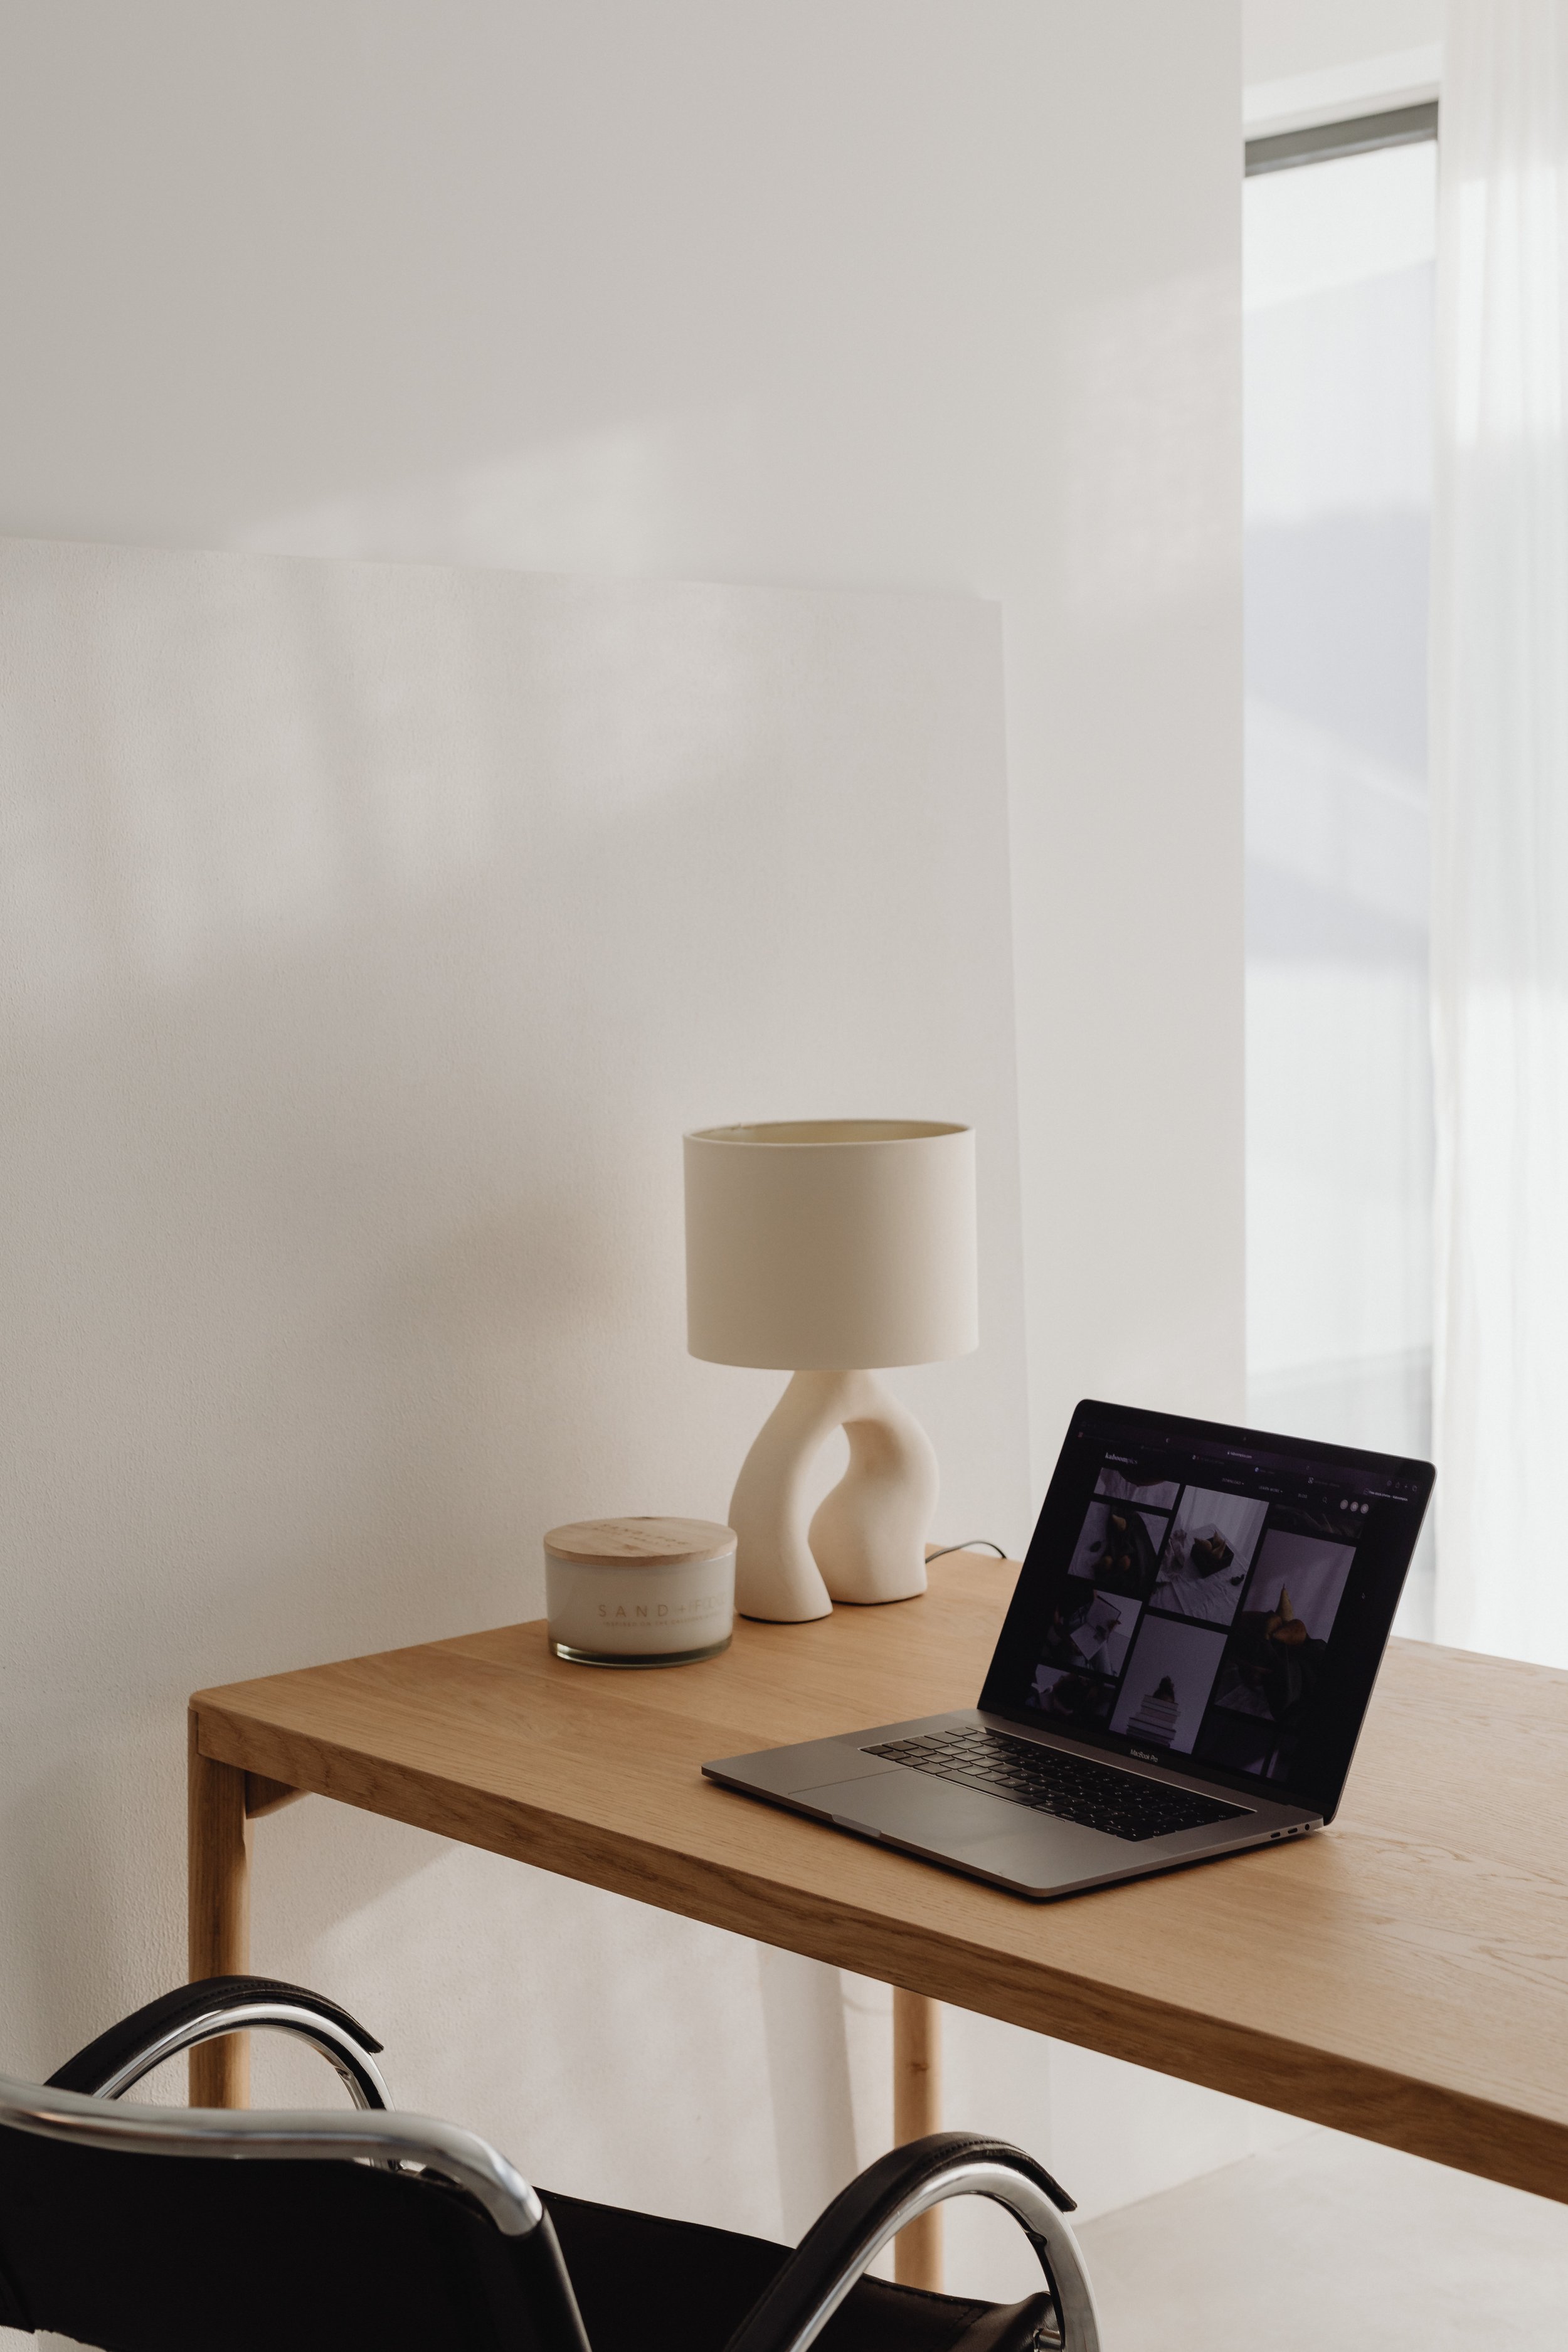 kaboompics_wooden-desk-laptop-home-office-minimalist-warm-minimal-28767.jpg